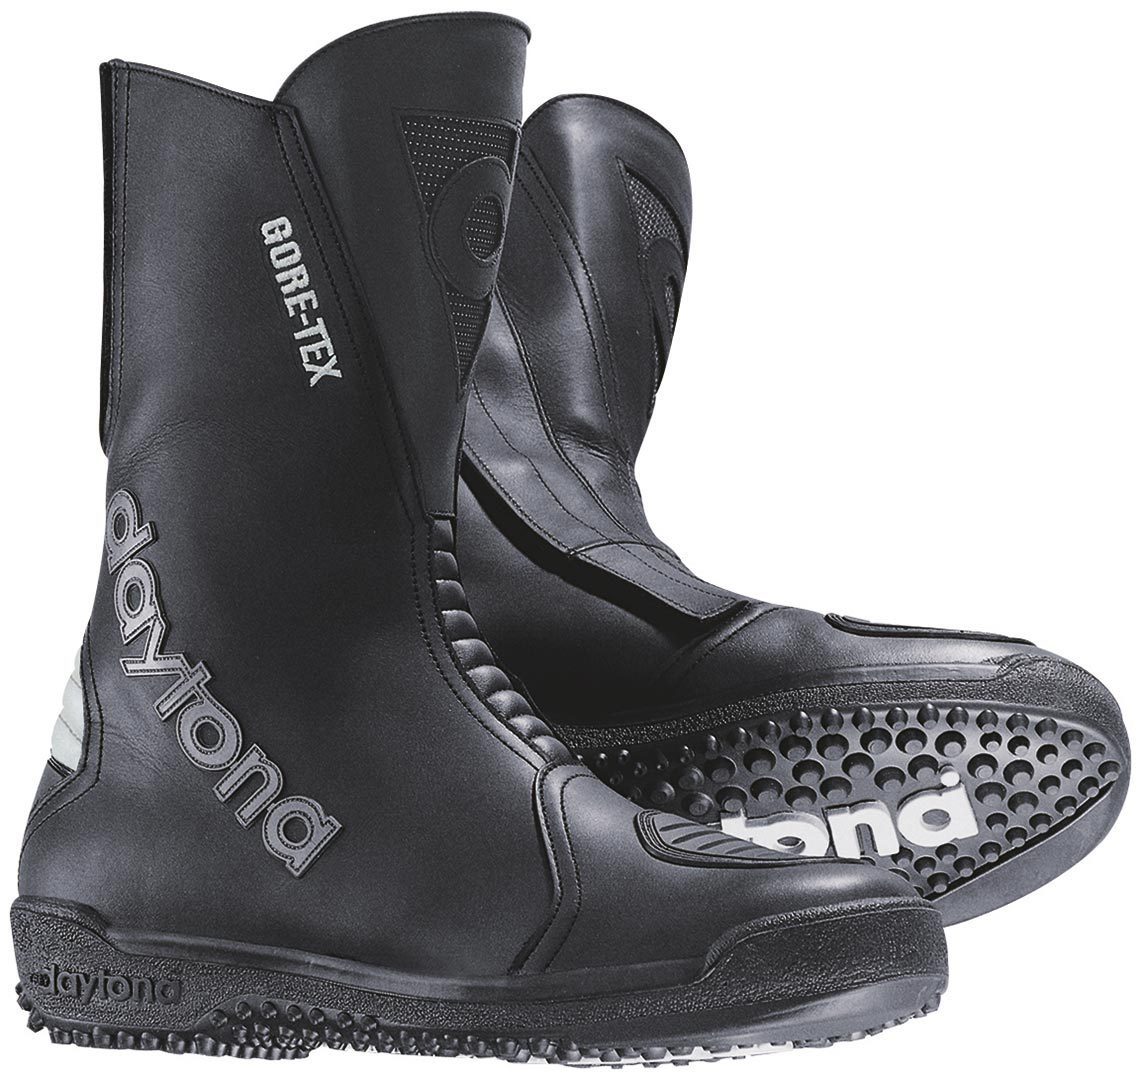 Daytona Nonstop GTX Gore-Tex waterproof Motorcycle Boots, black, Size 38, black, Size 38